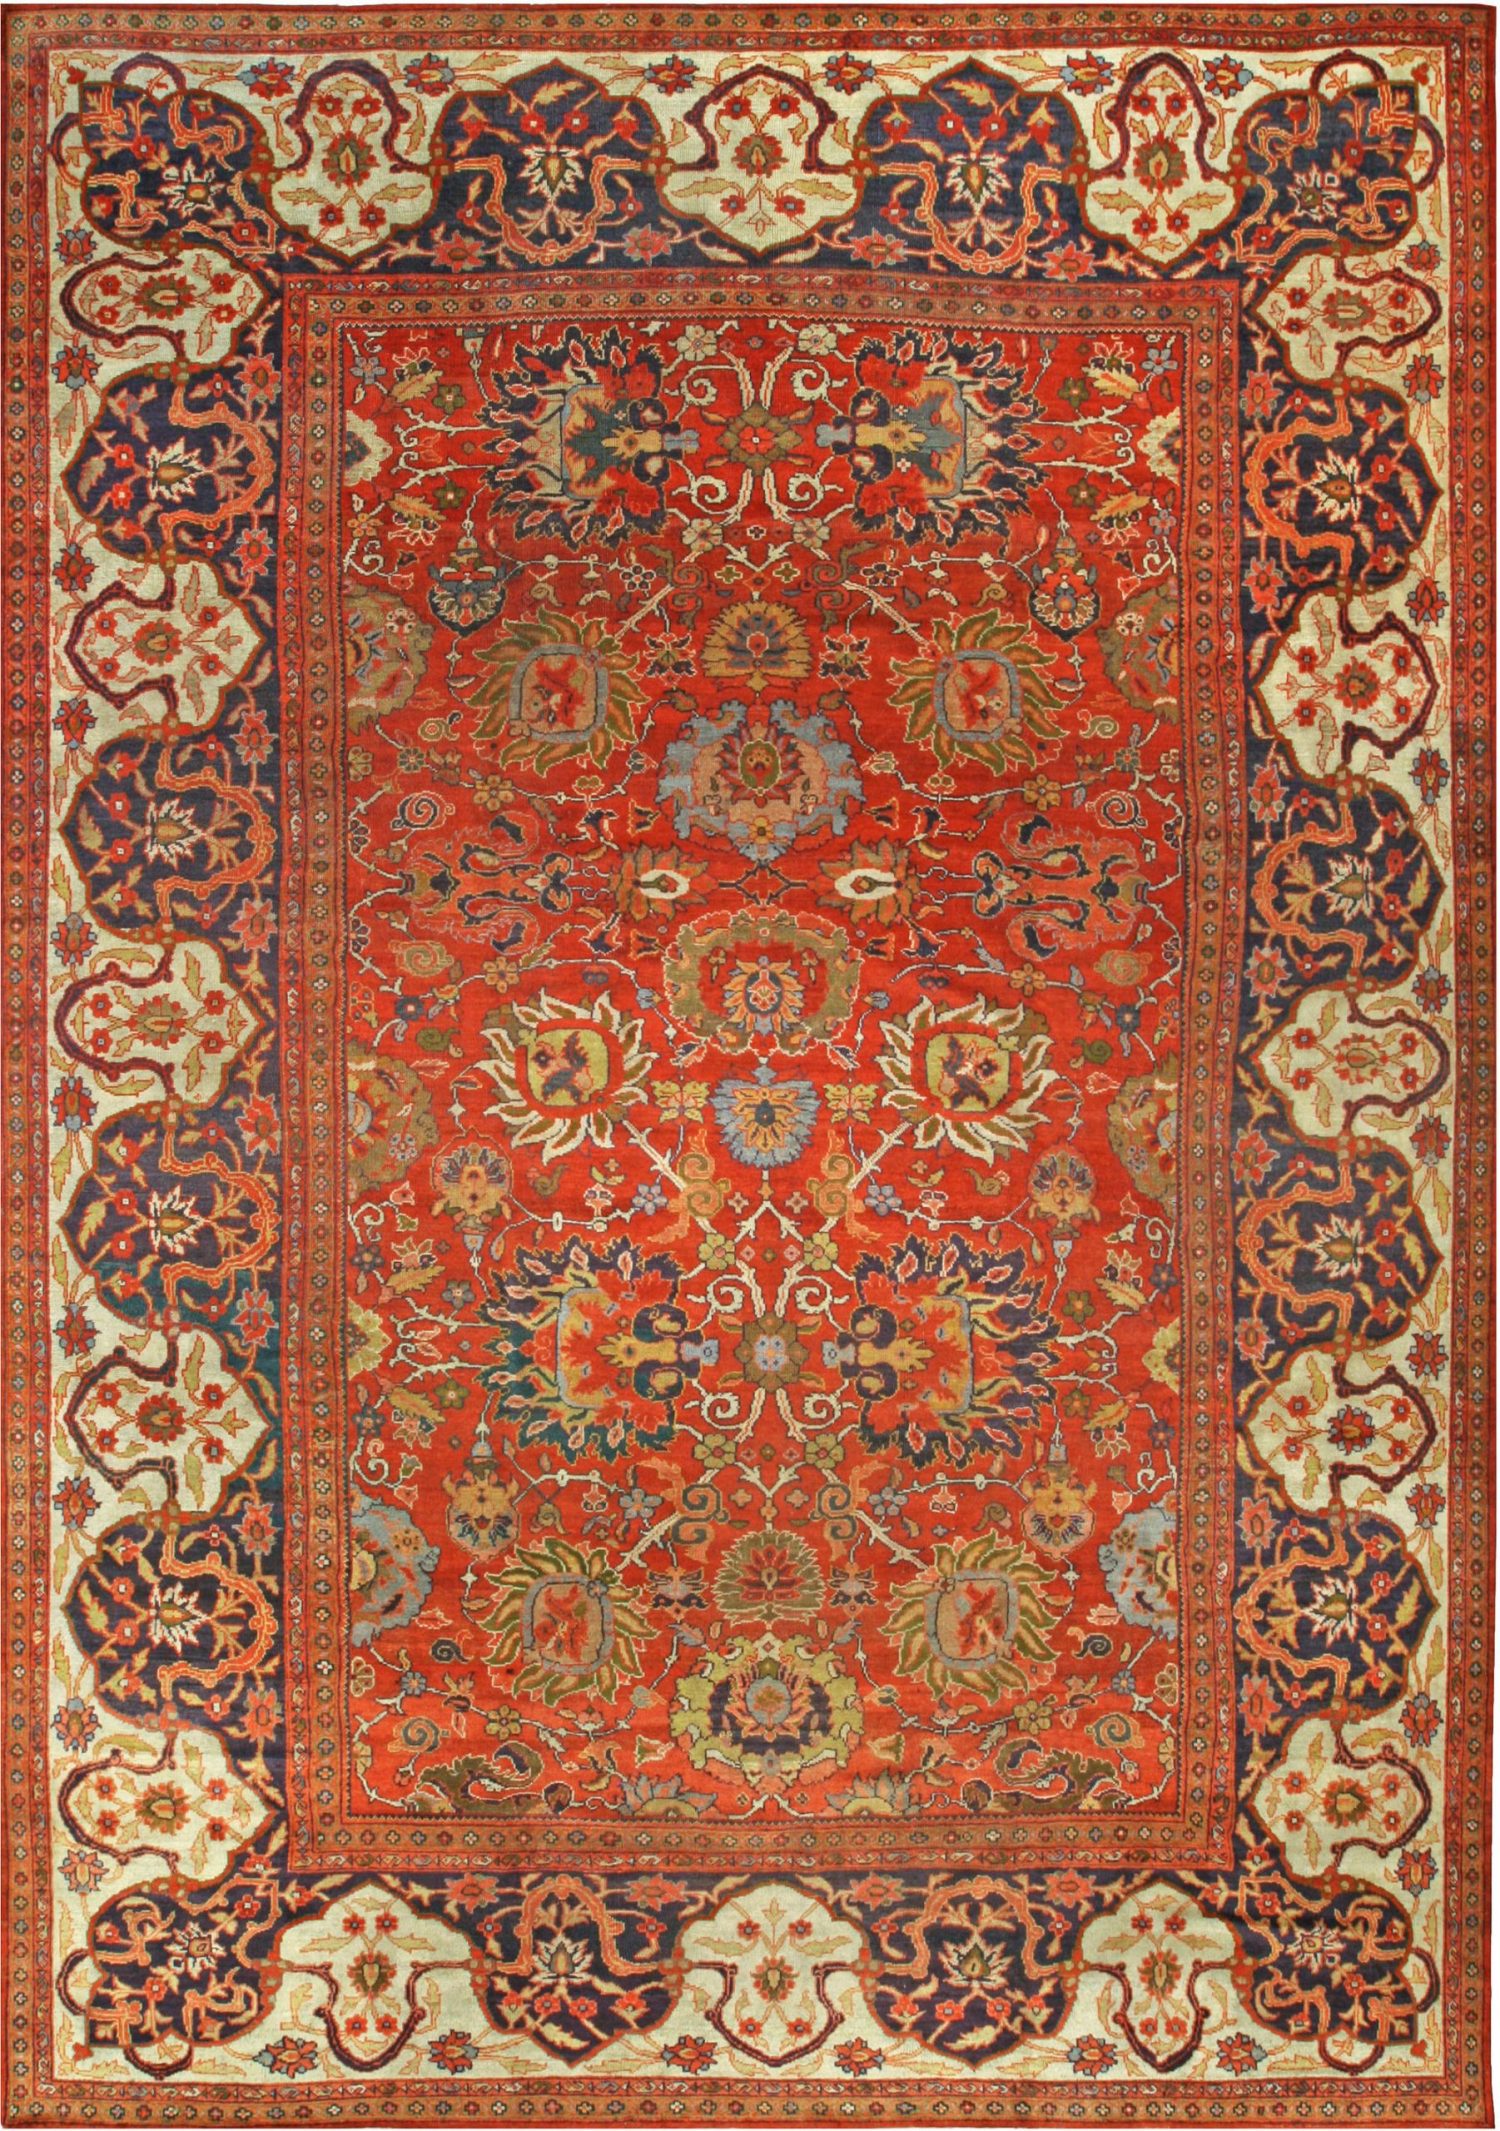 19th Century Persian Sultanabad Red Botanical Handmade Carpet BB6711